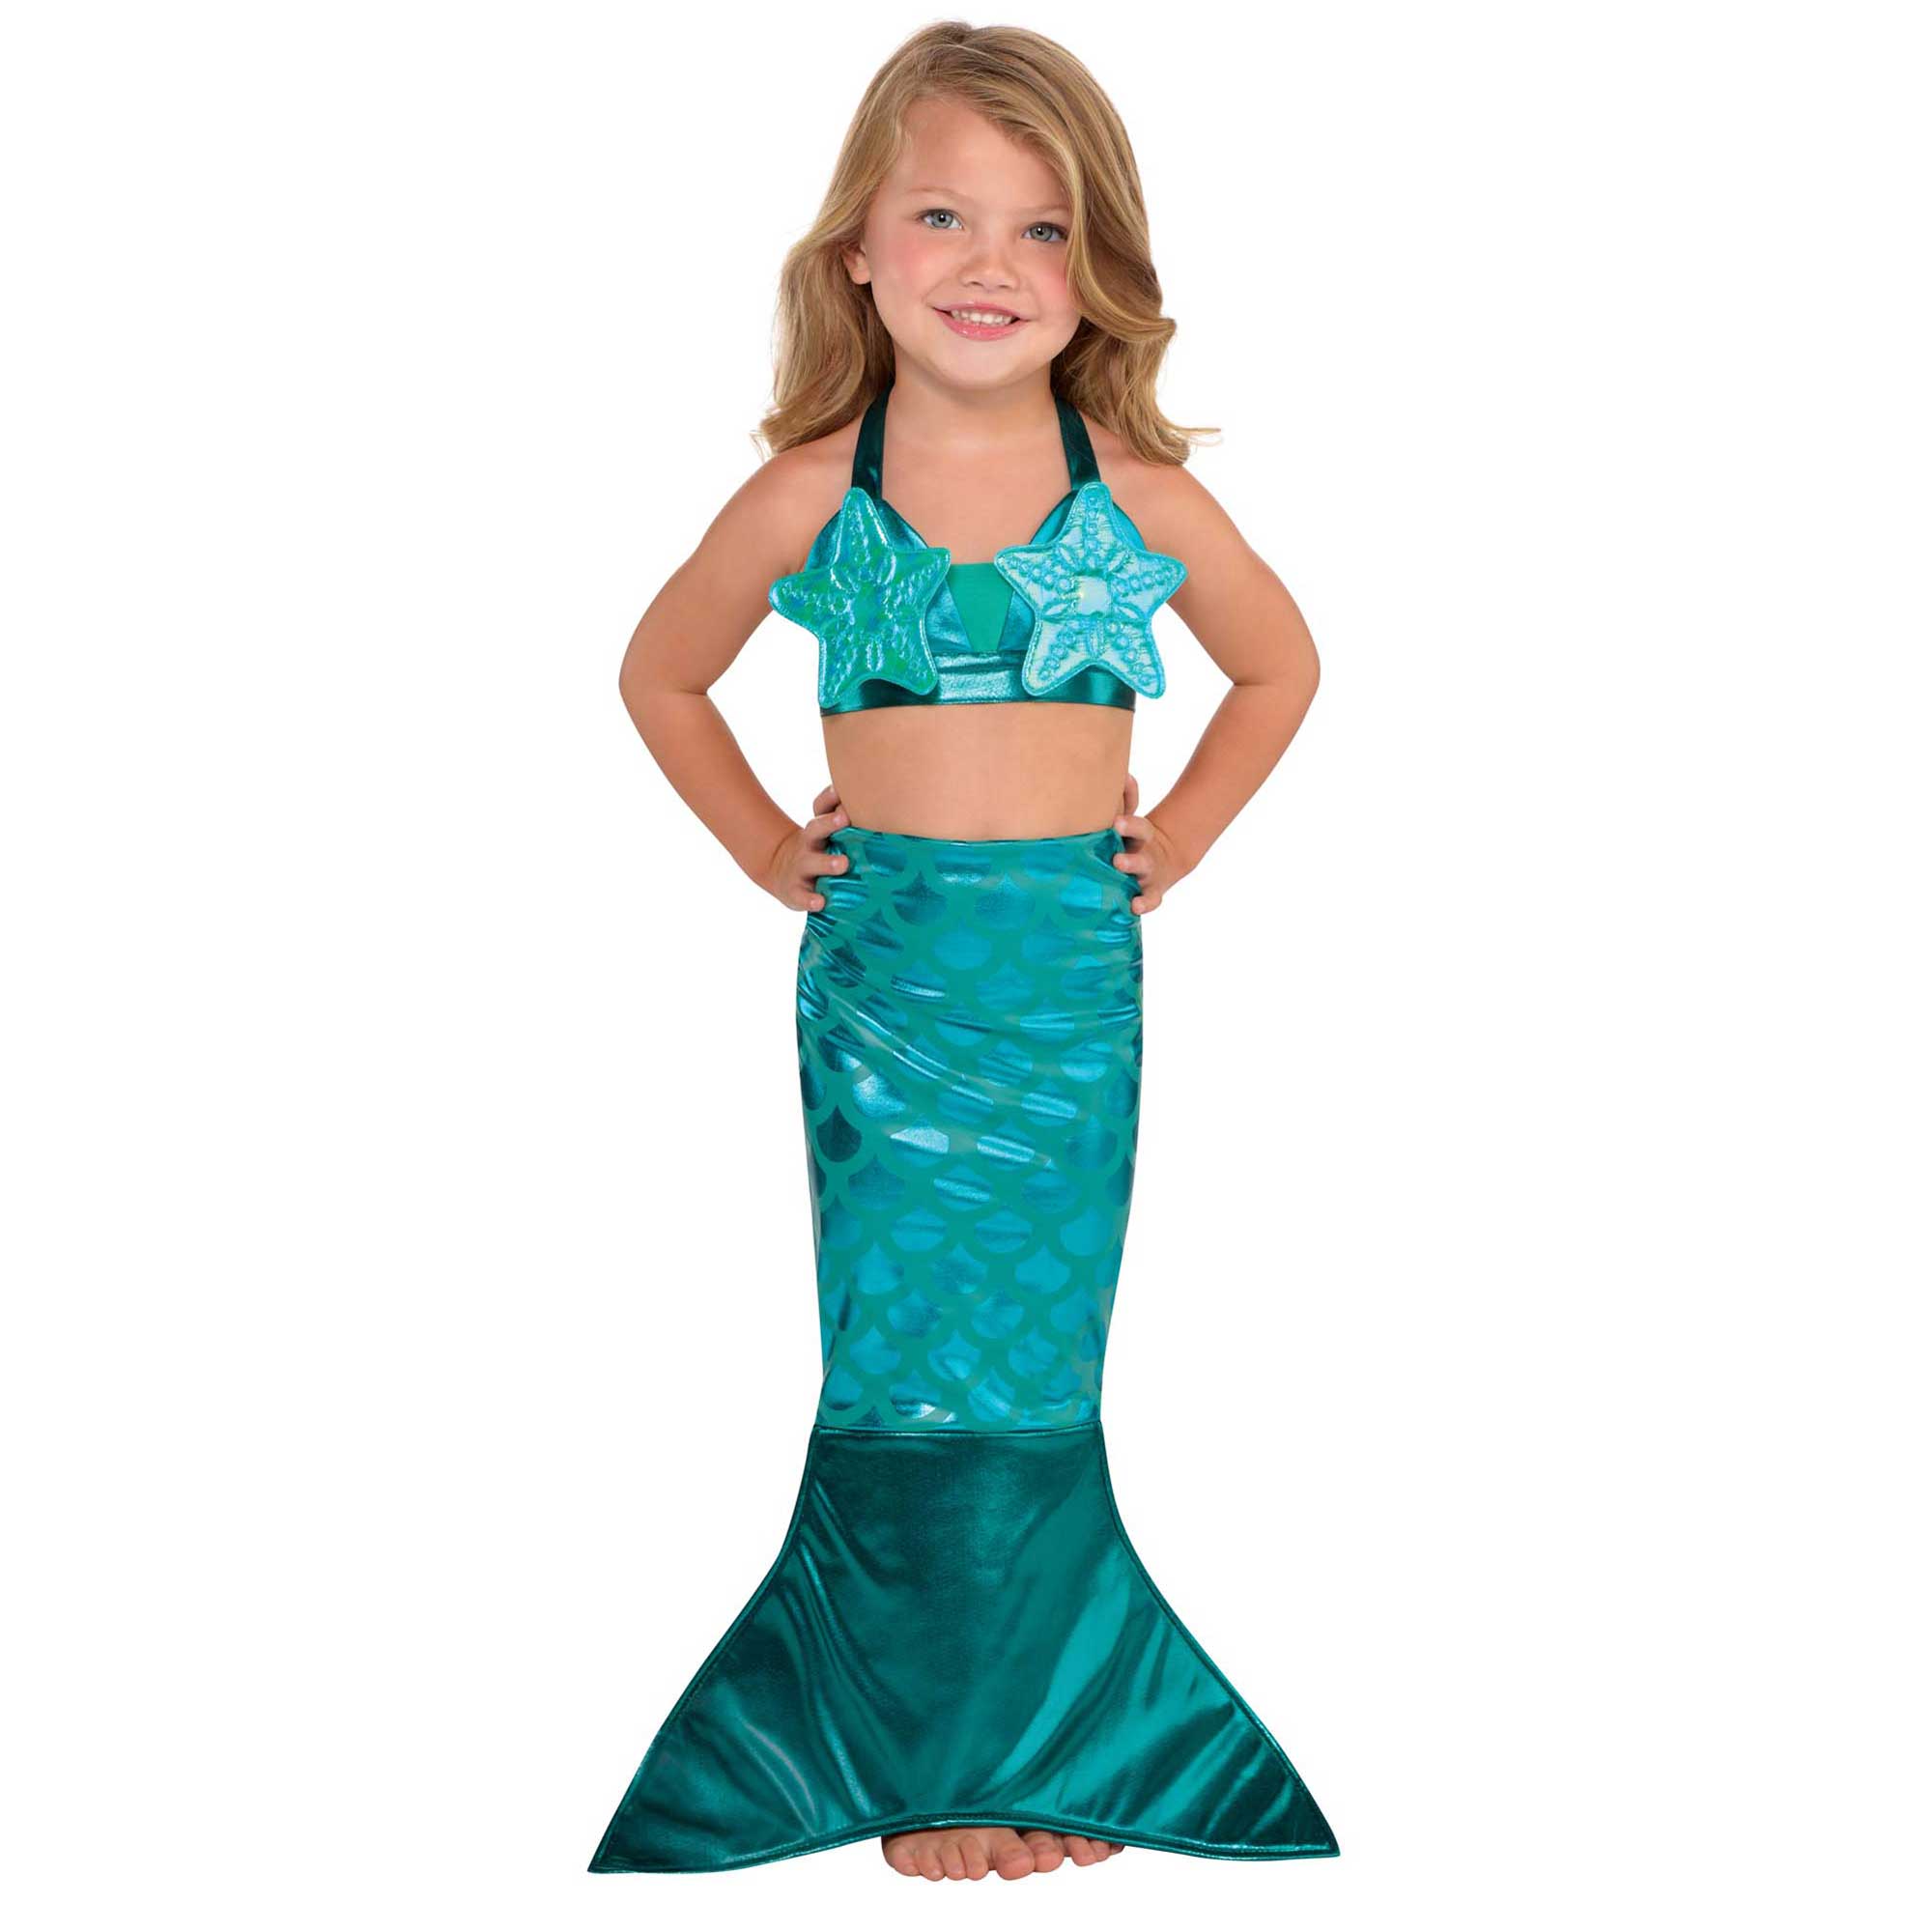 Mermaid Teal Costume Kit Girl Medium 8-10 Years